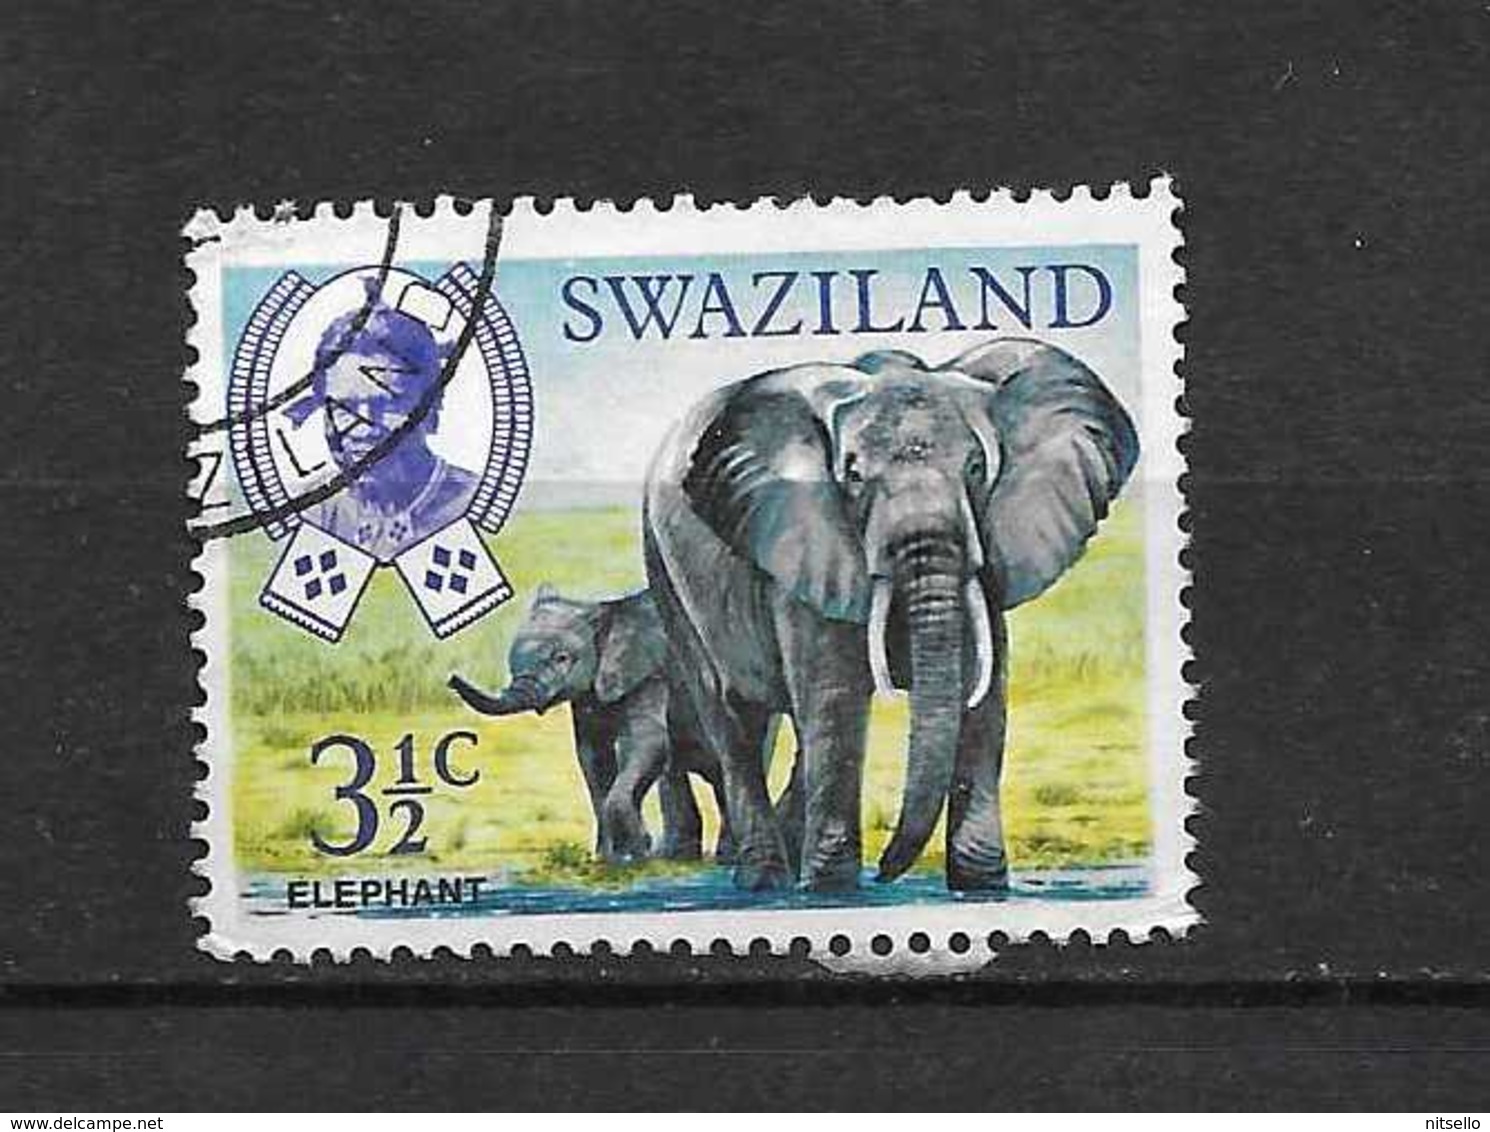 LOTE 1842  ///  SWAZILAND     ¡¡¡¡ LIQUIDATION !!!! - Swaziland (1968-...)